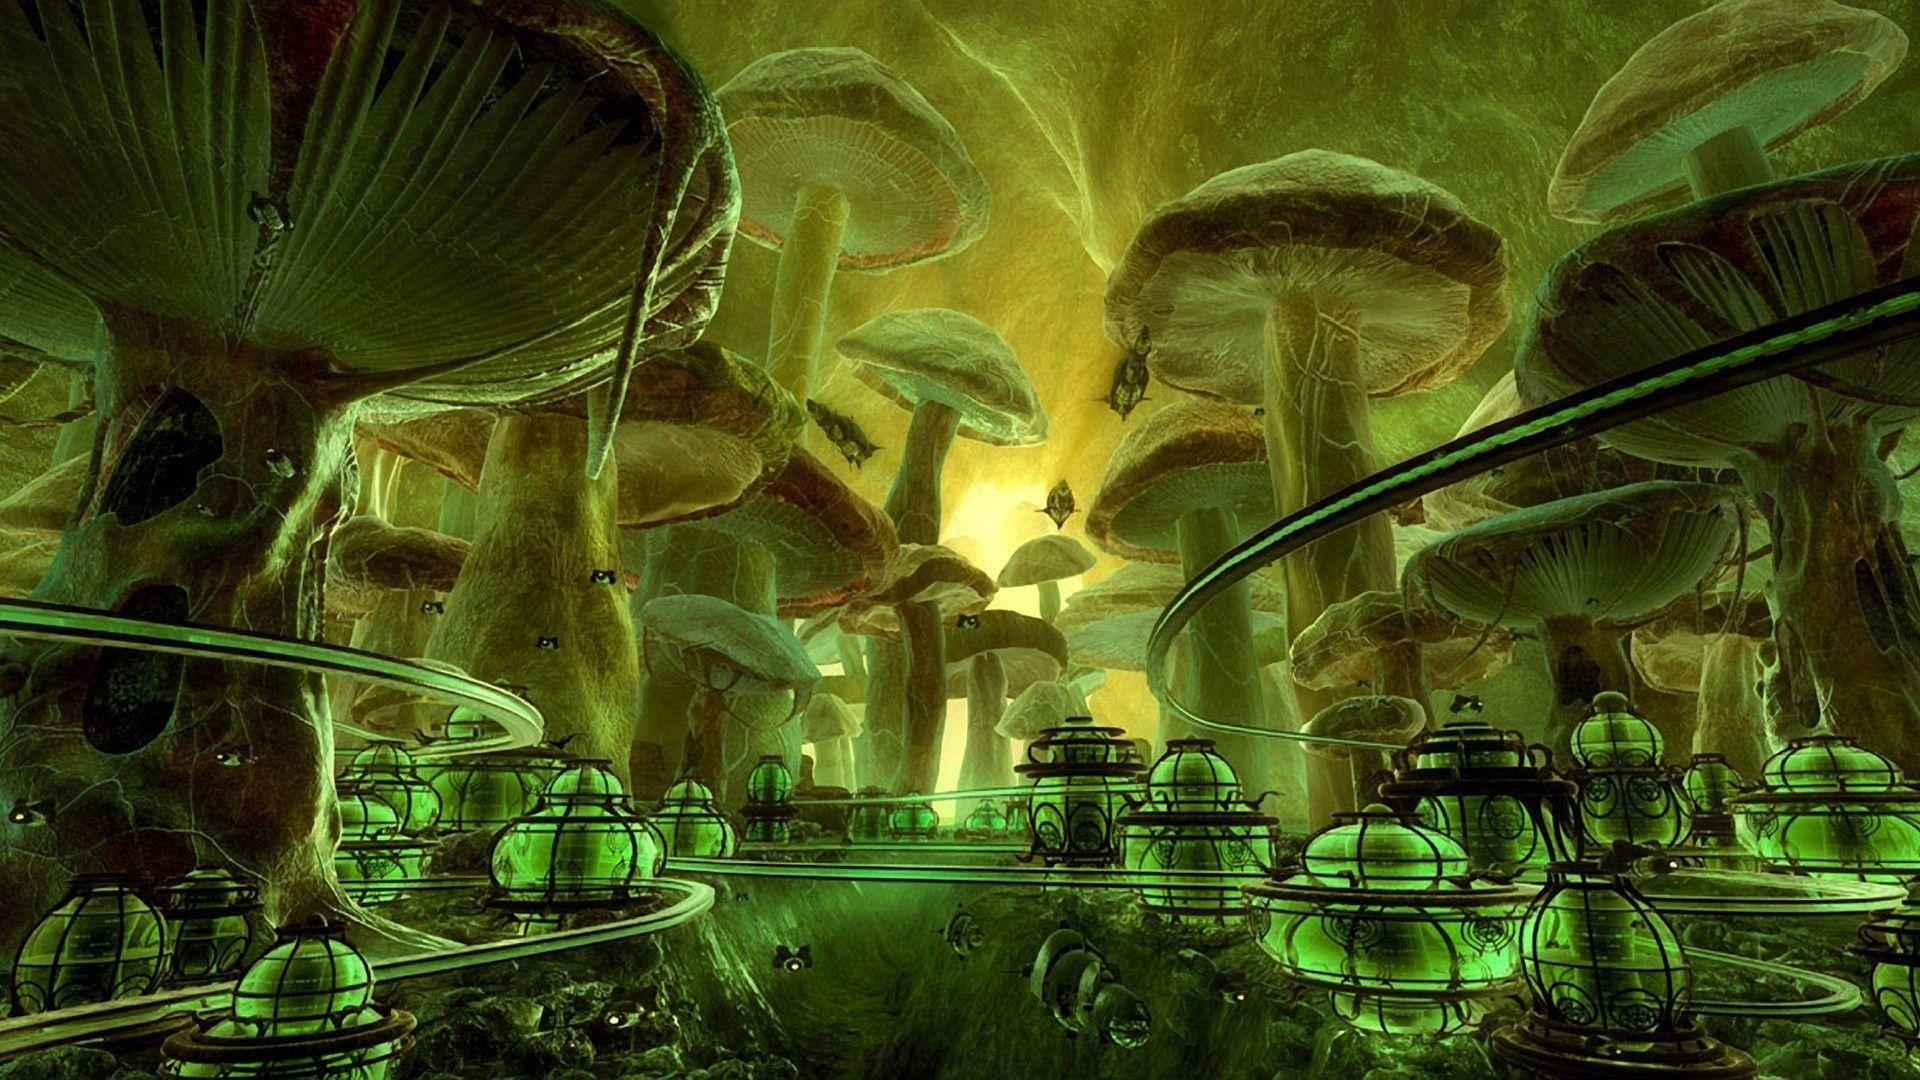 Fantasy Mushroom Wallpapers - Top Free Fantasy Mushroom Backgrounds